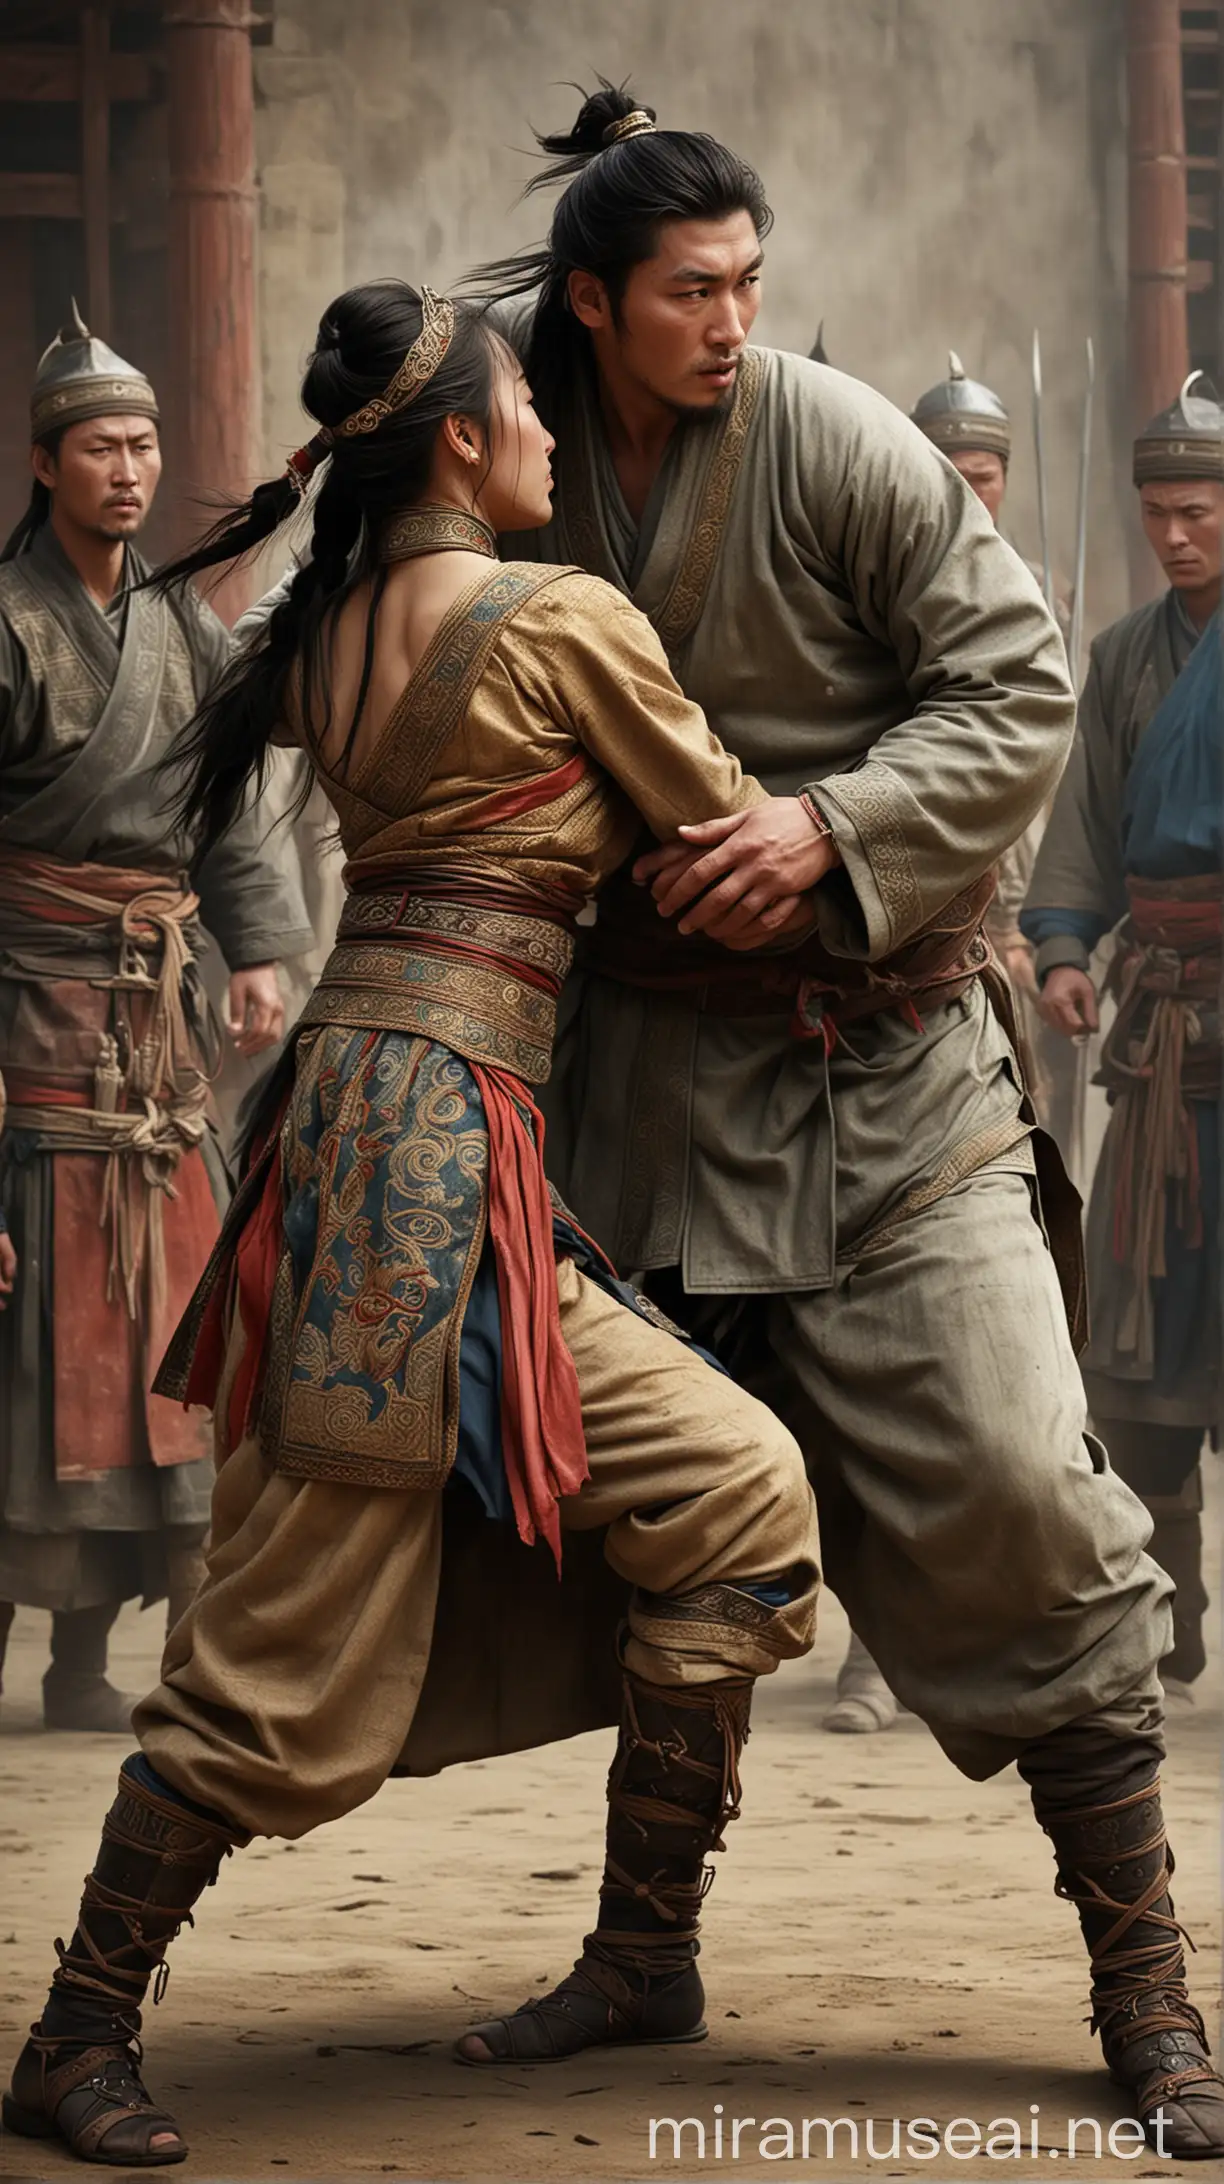 13th Century Mongolian Court Intense Wrestling Match Between Princess Khutulun and a Young Man